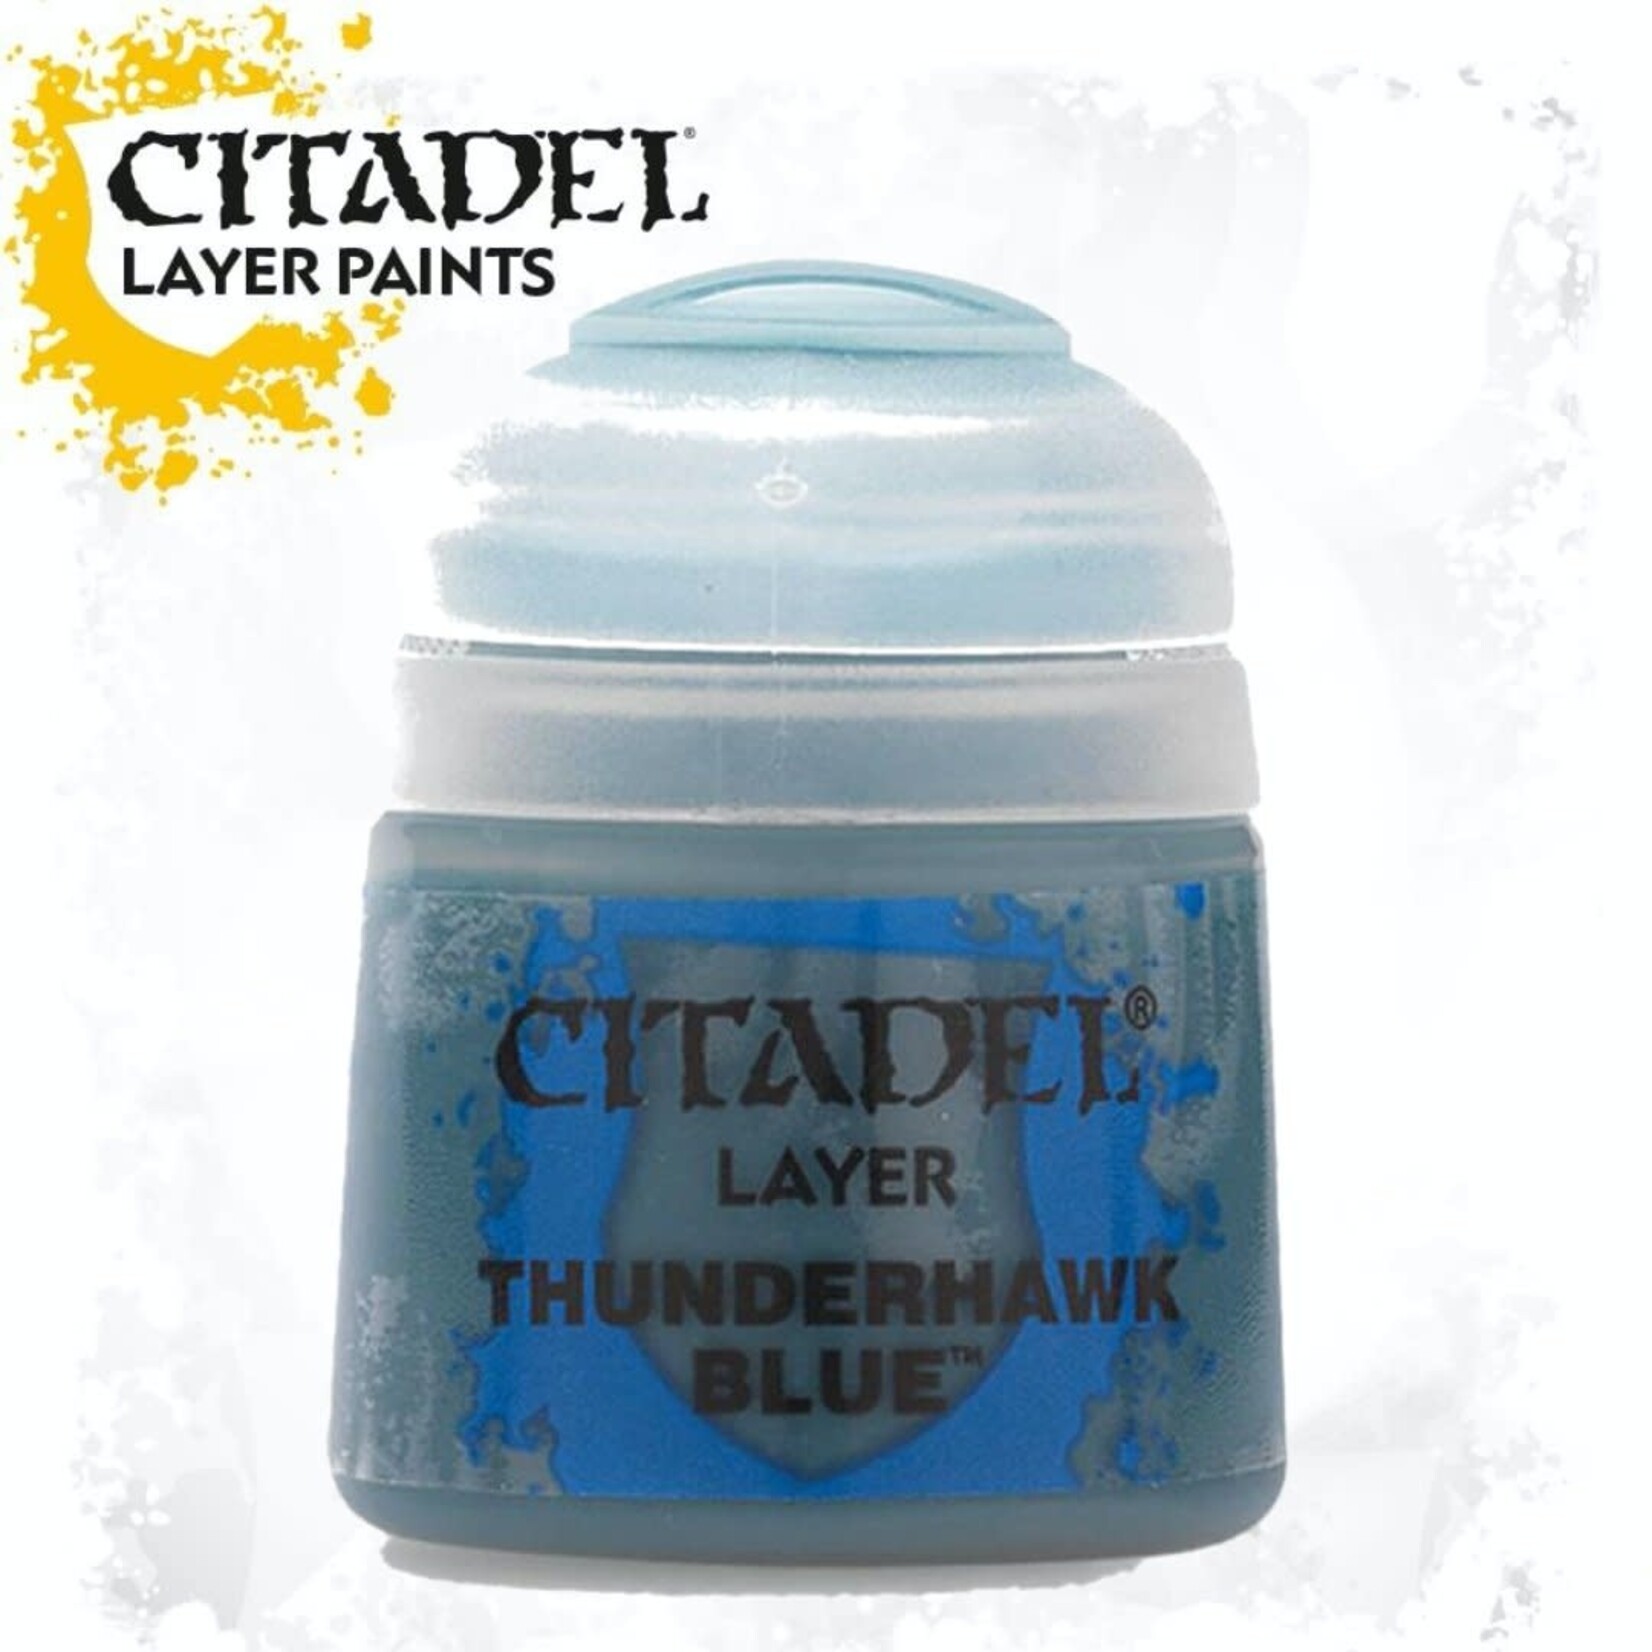 Citadel Citadel Paint - Layer: Thunderhawk Blue